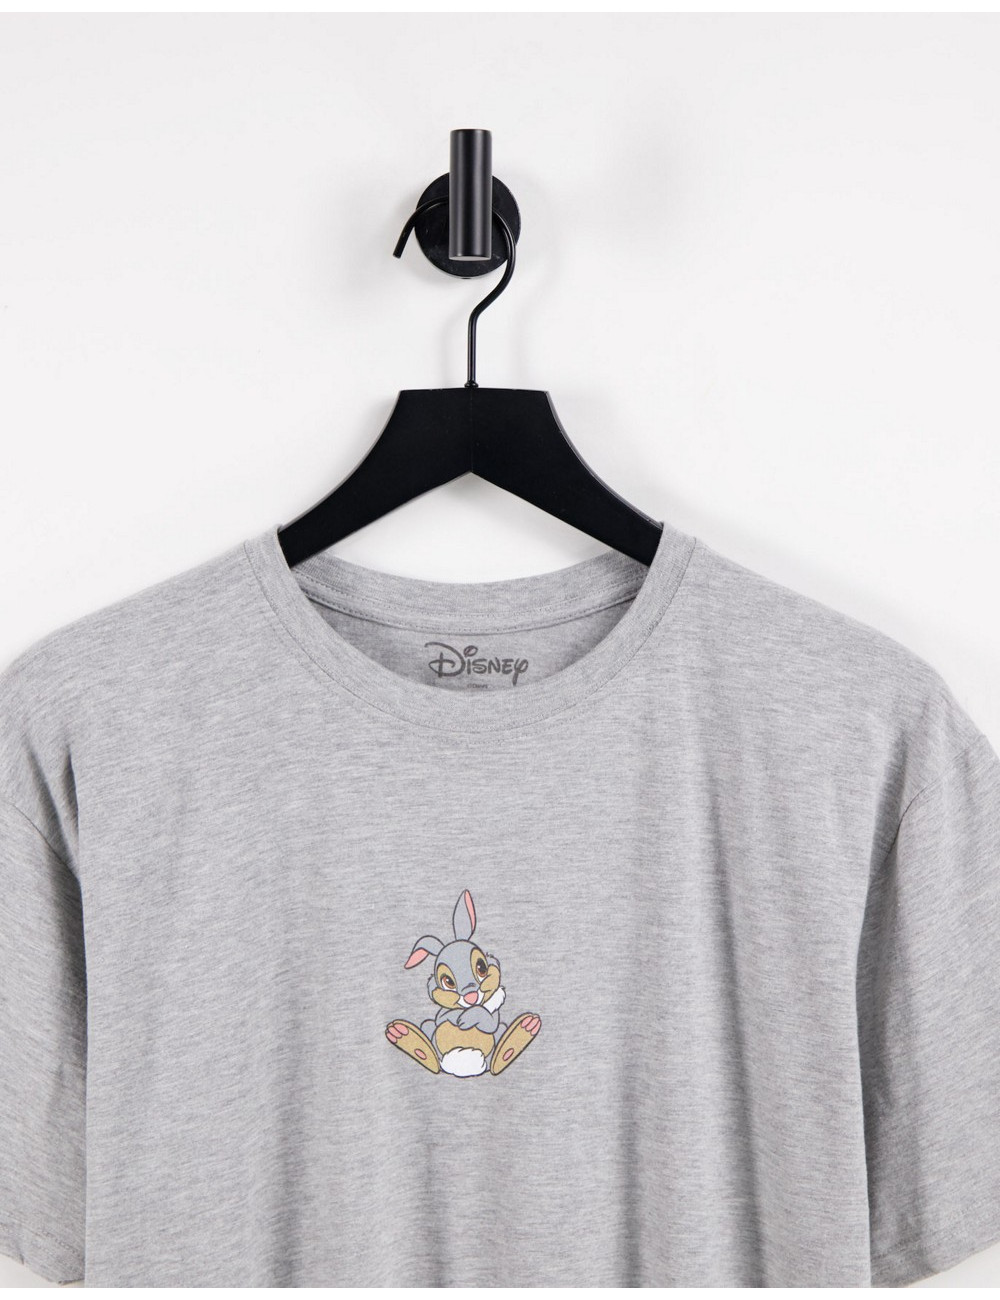 Disney Thumper t-shirt...